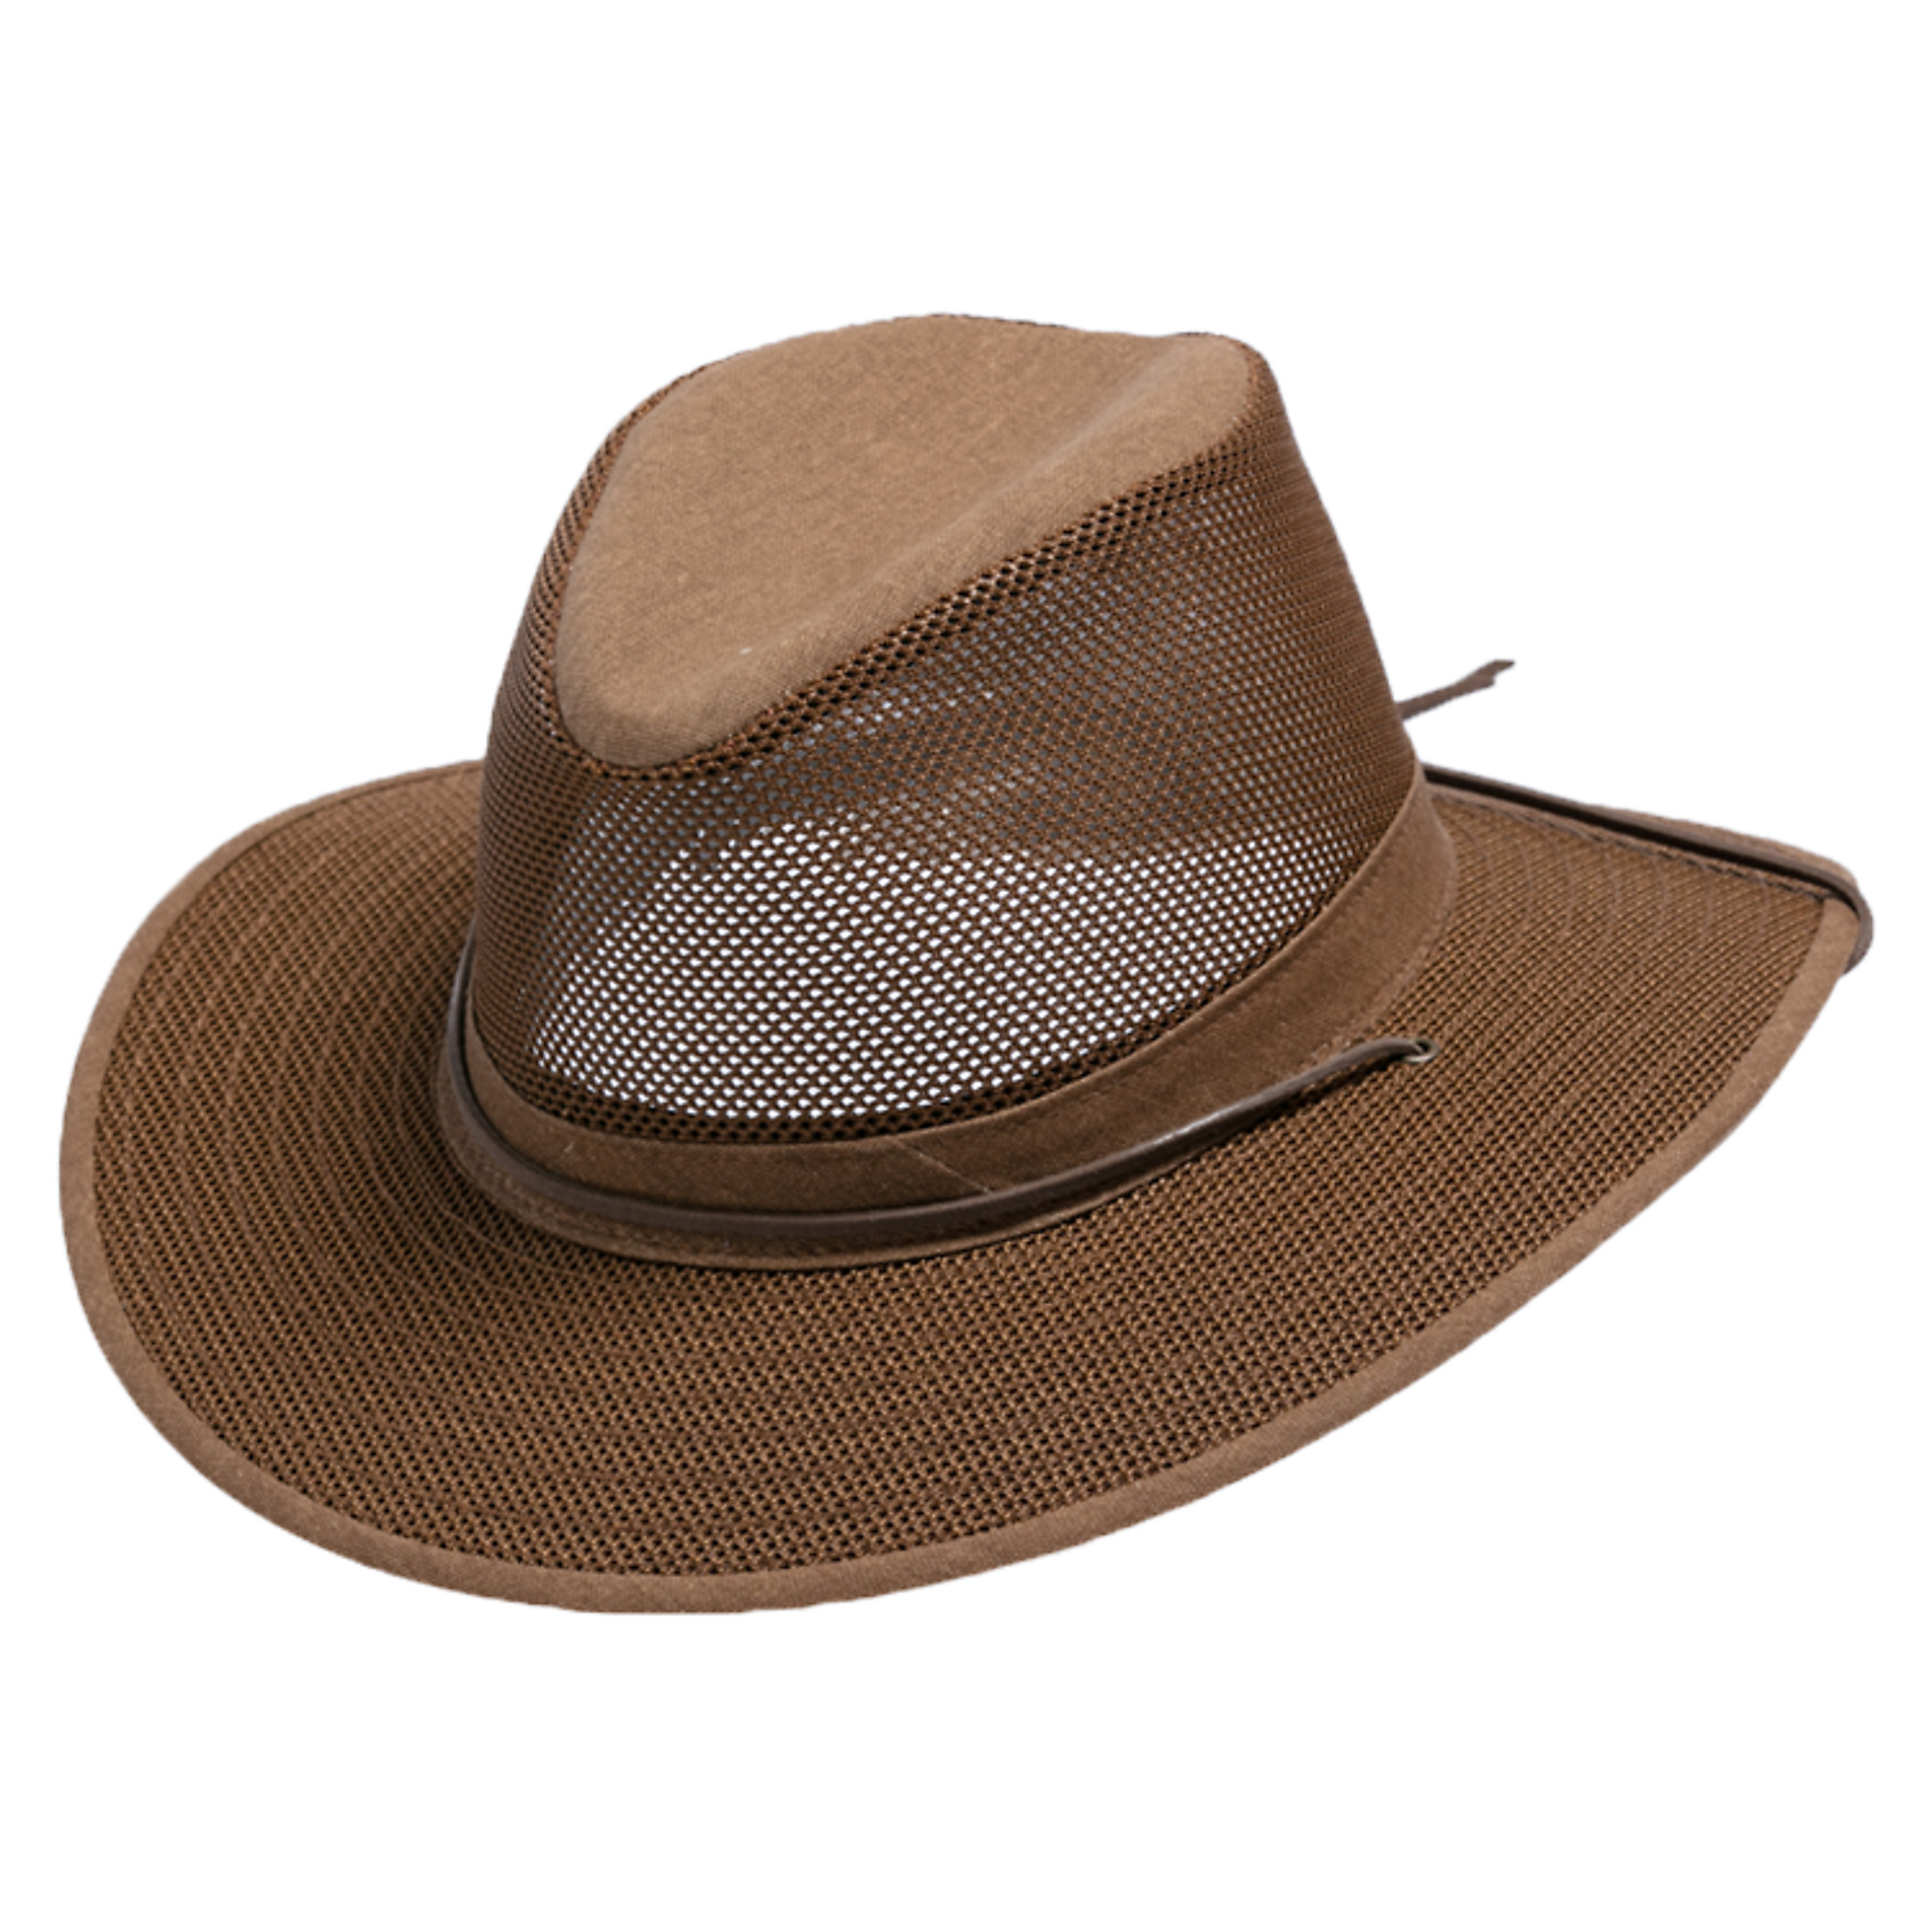 Henschel Hat Company, Orignal Aussie Breezer Hat, UPF 50+